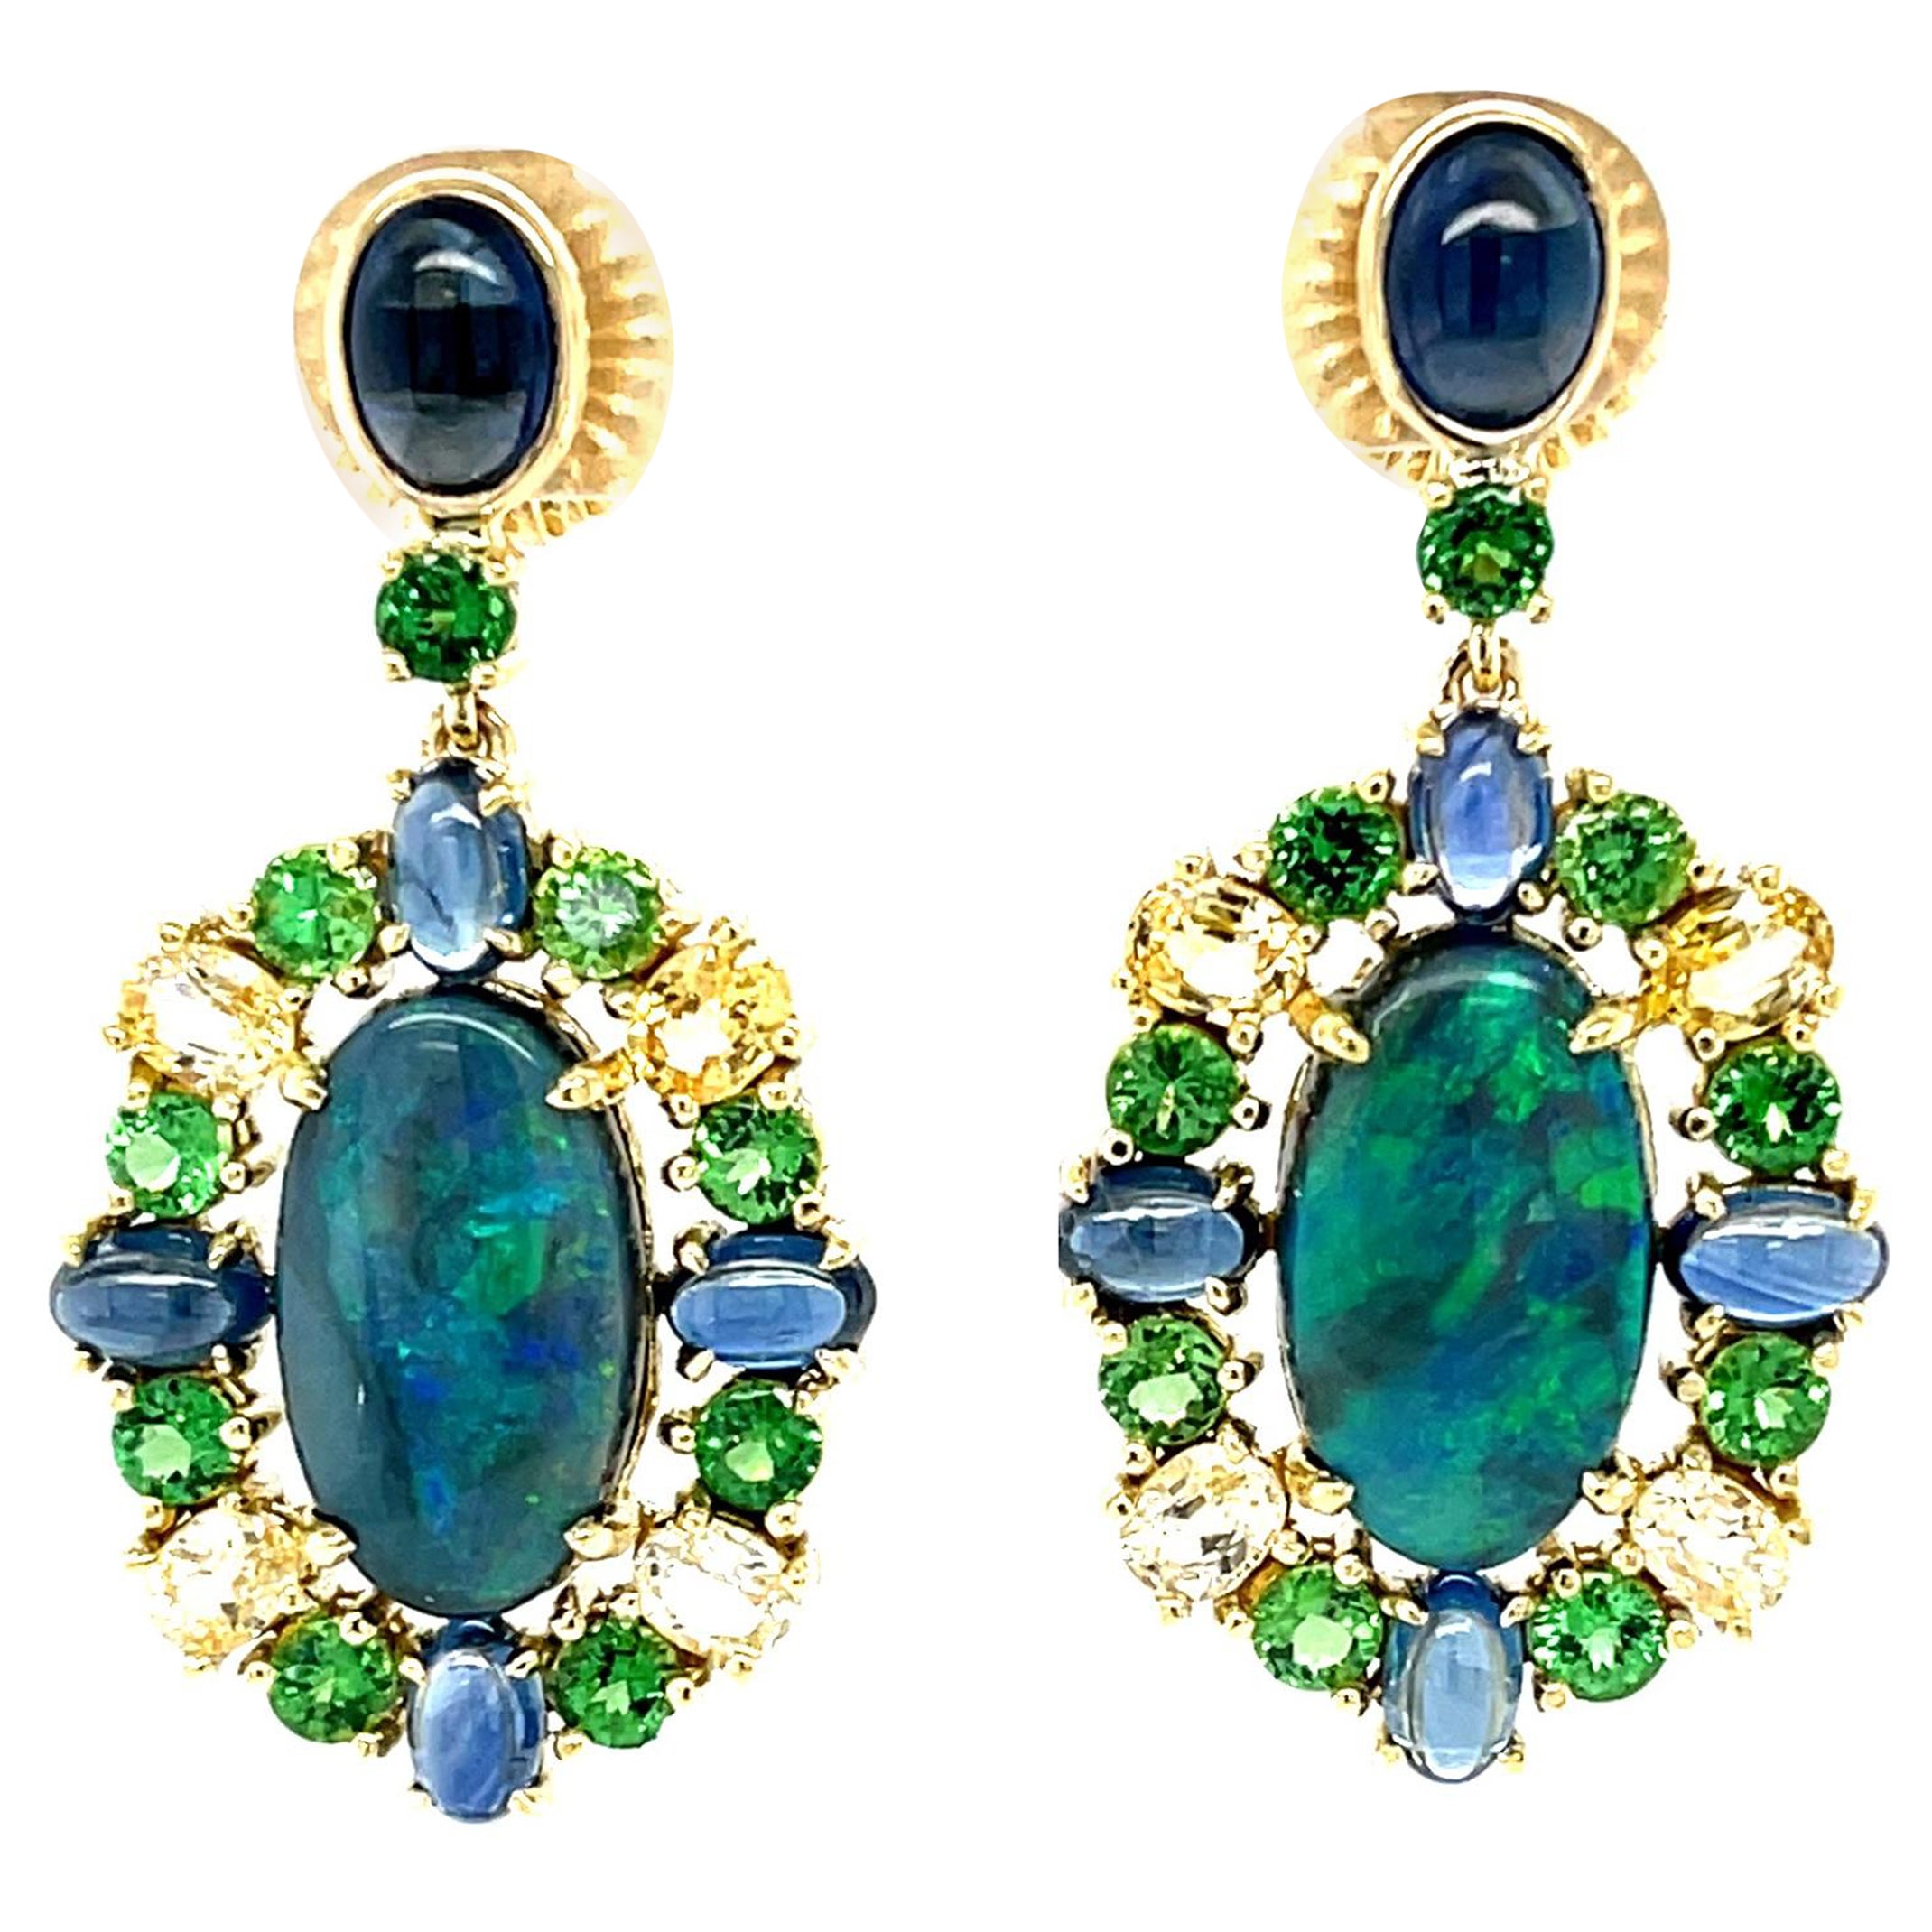 Black Opal, Blue Sapphire, Yellow Sapphire, Tsavorite Garnet Dangle Earrings